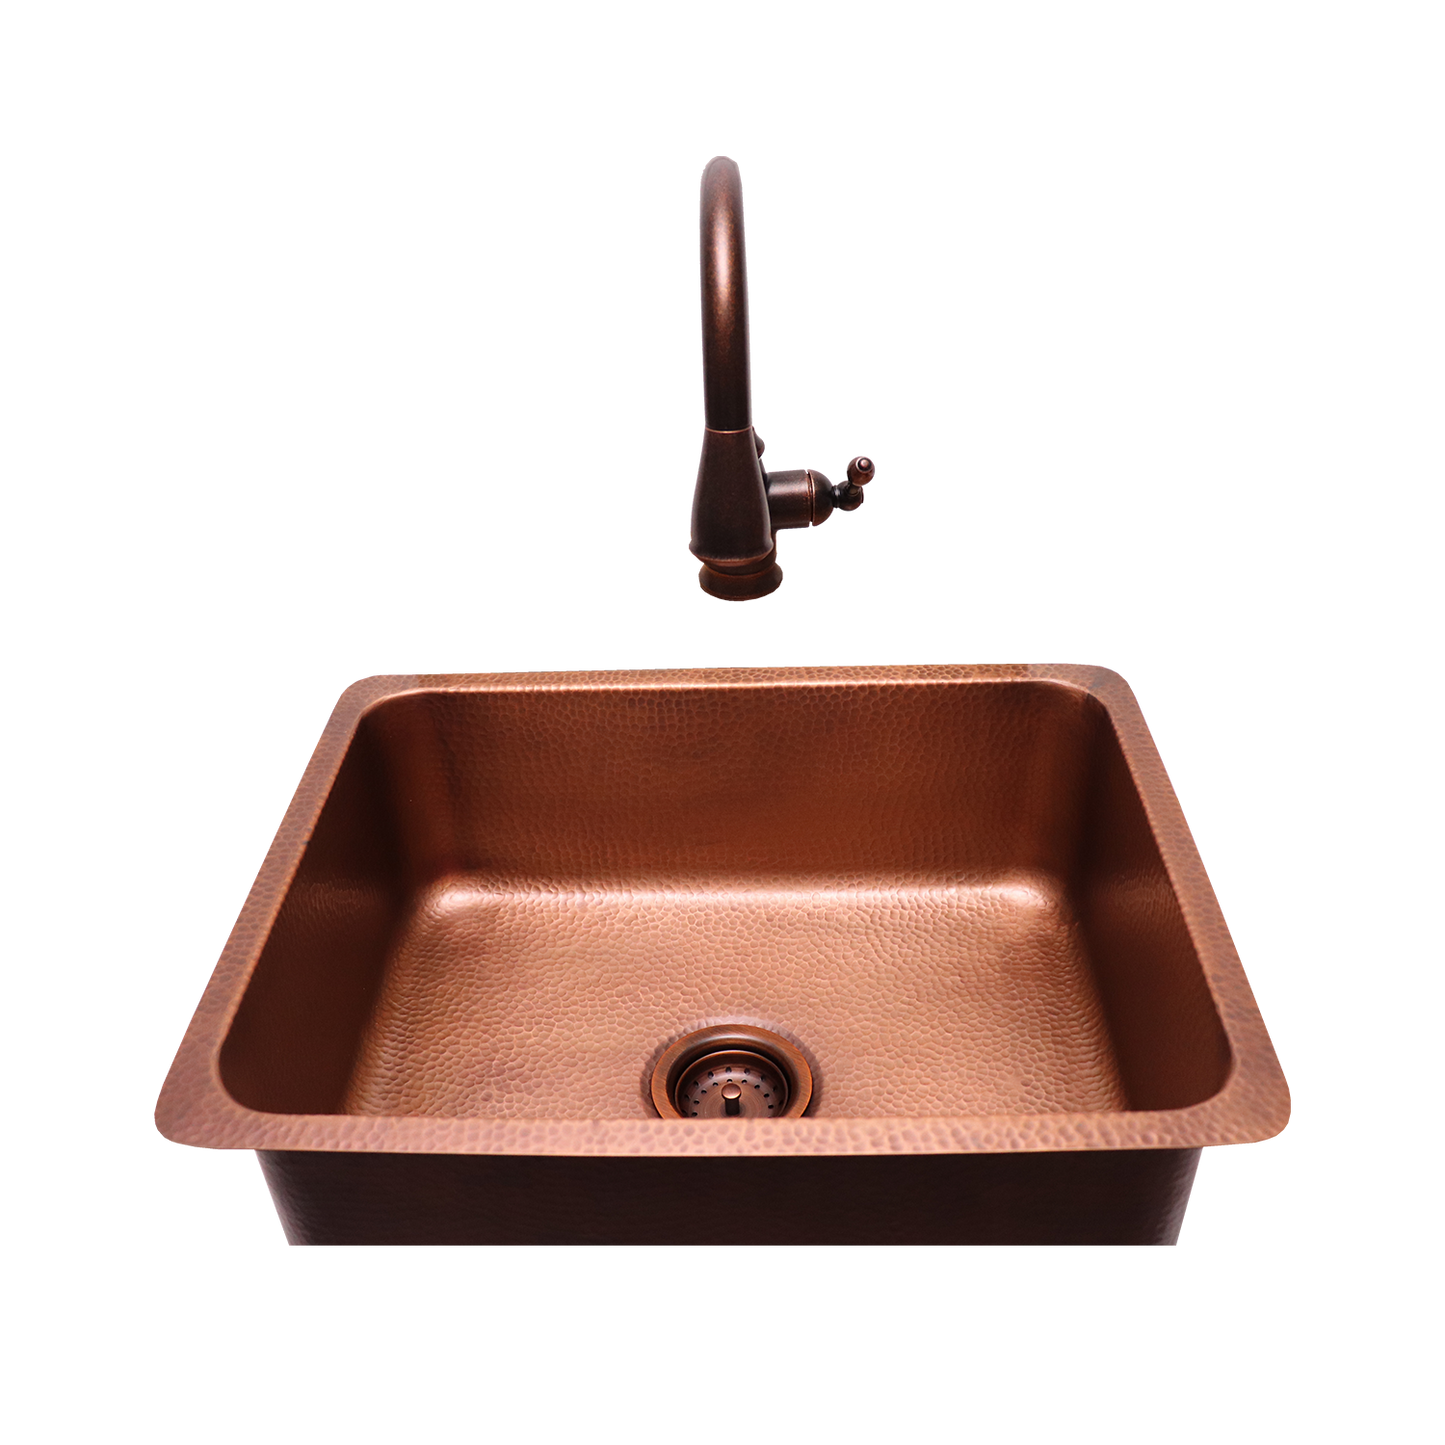 RCS Copper Undermount Sink